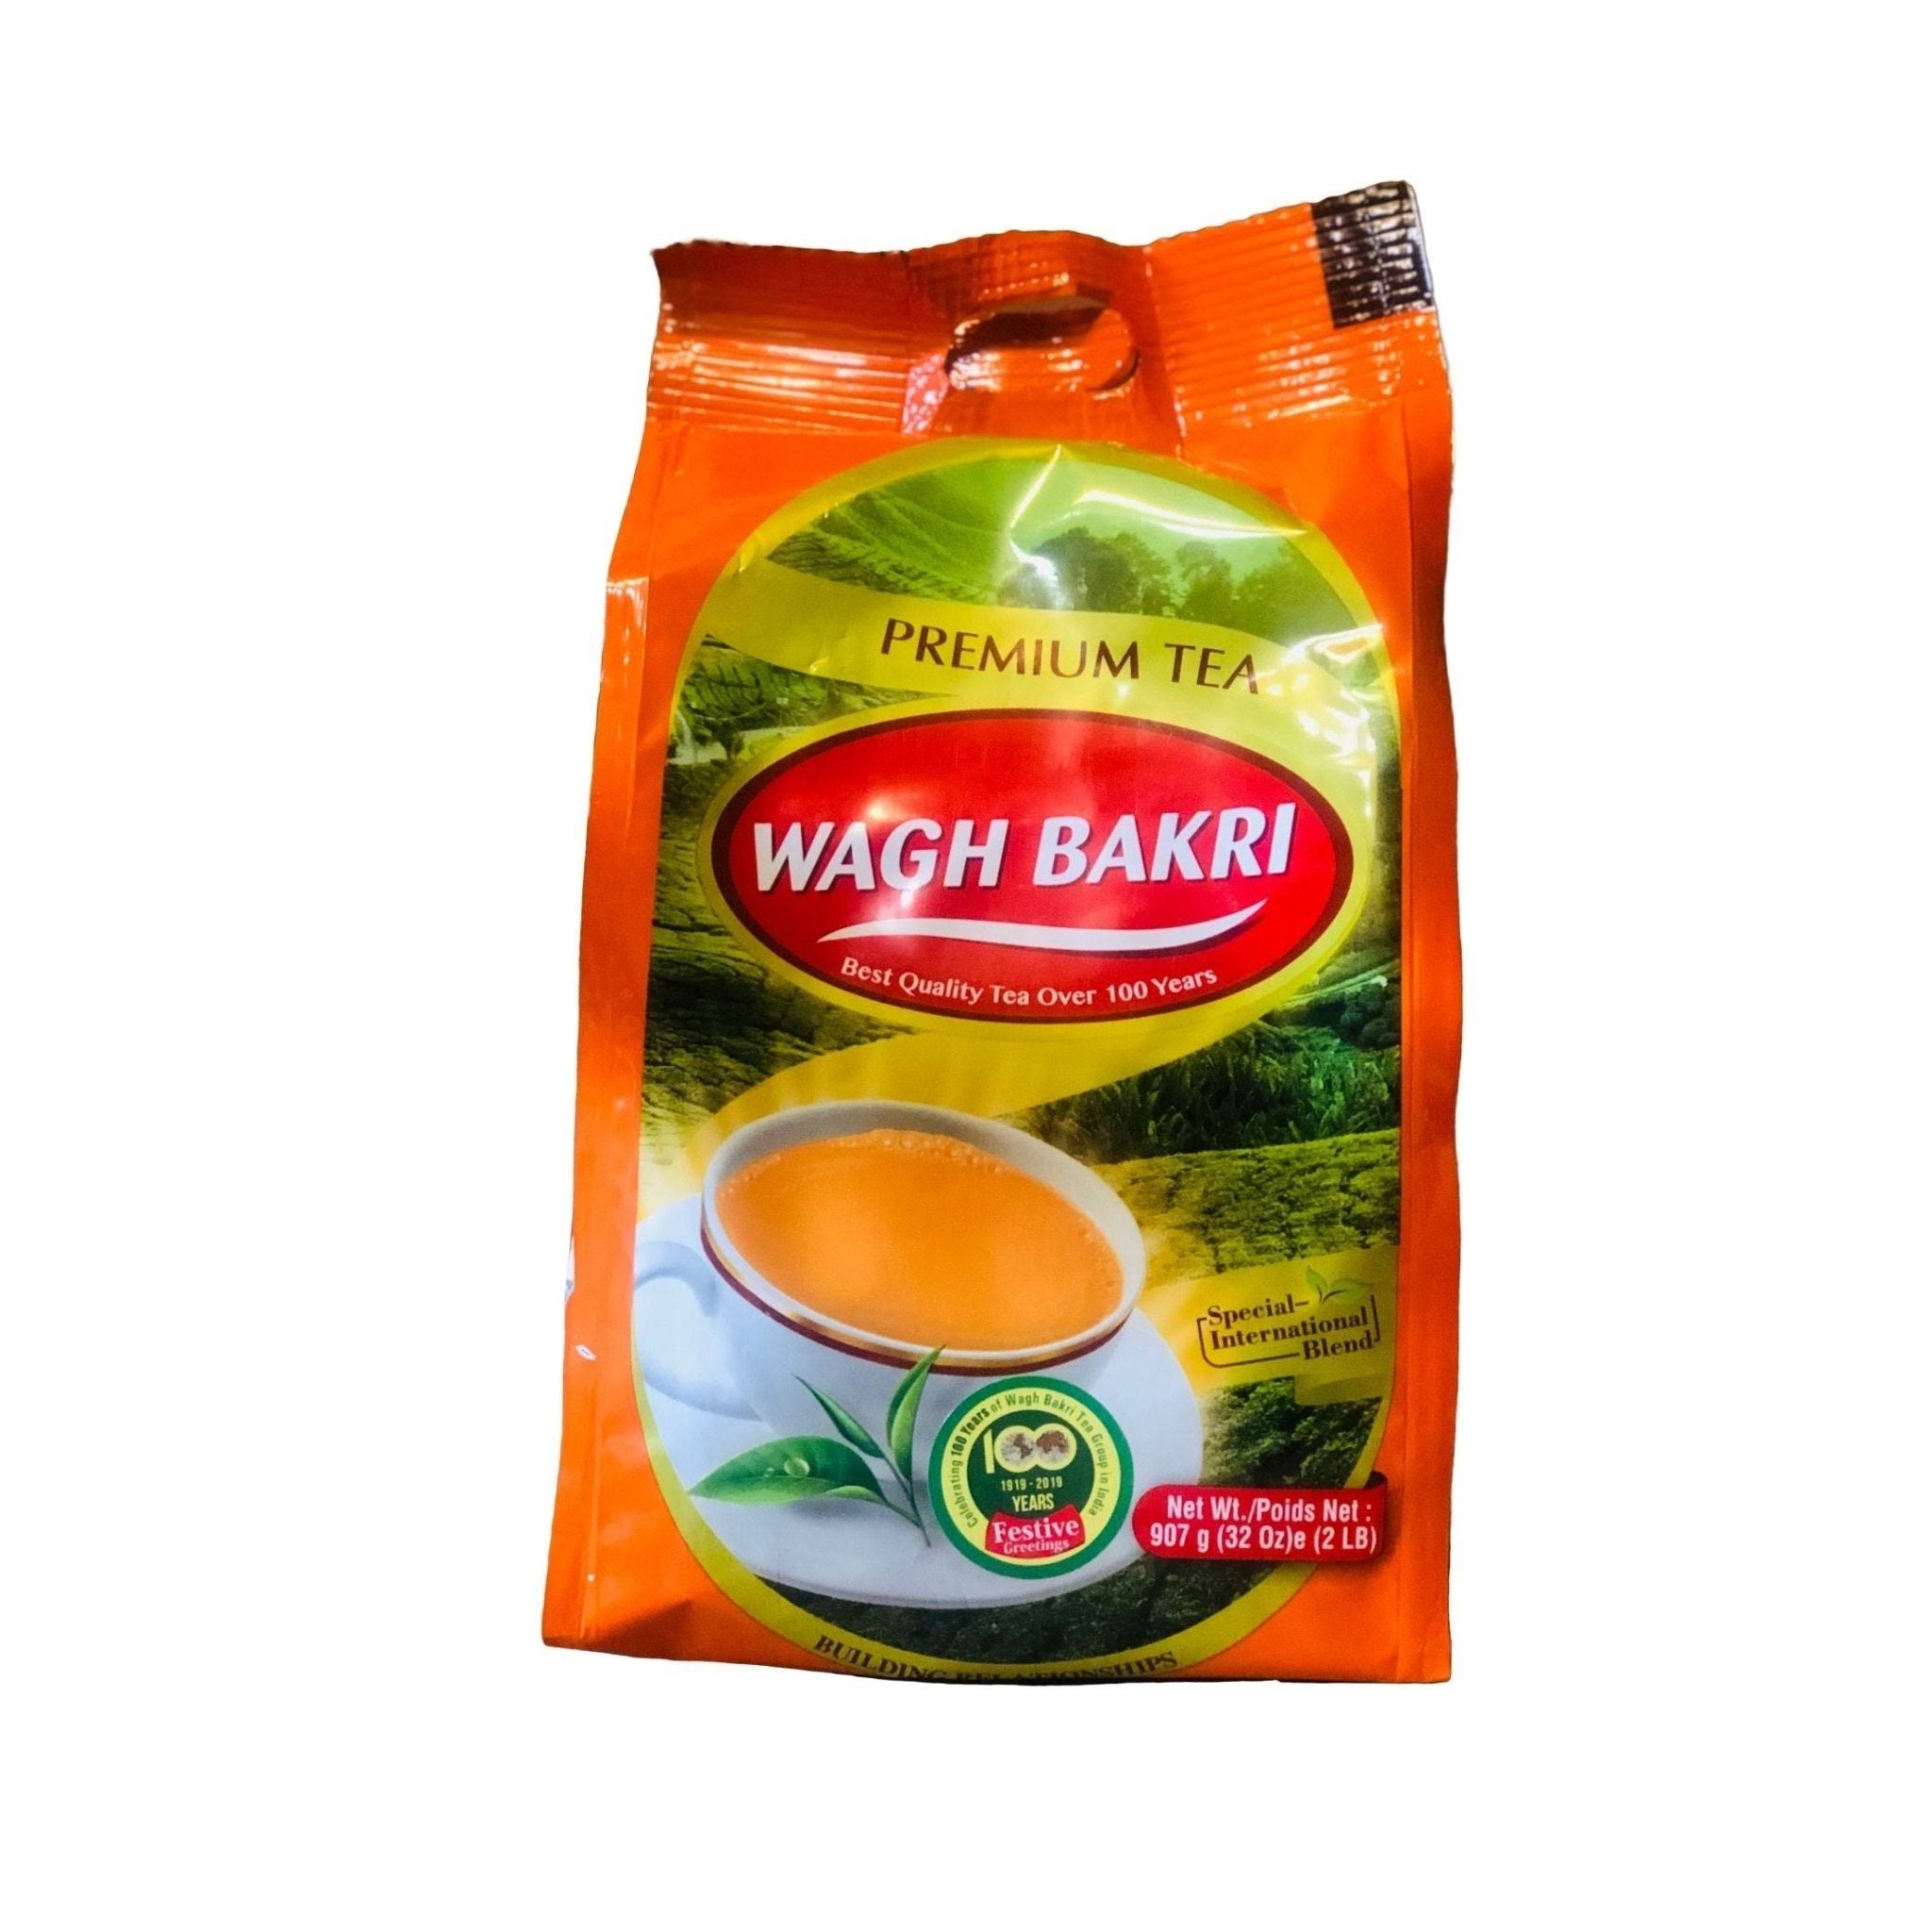 Wagh Bakri Tea 2 LBS